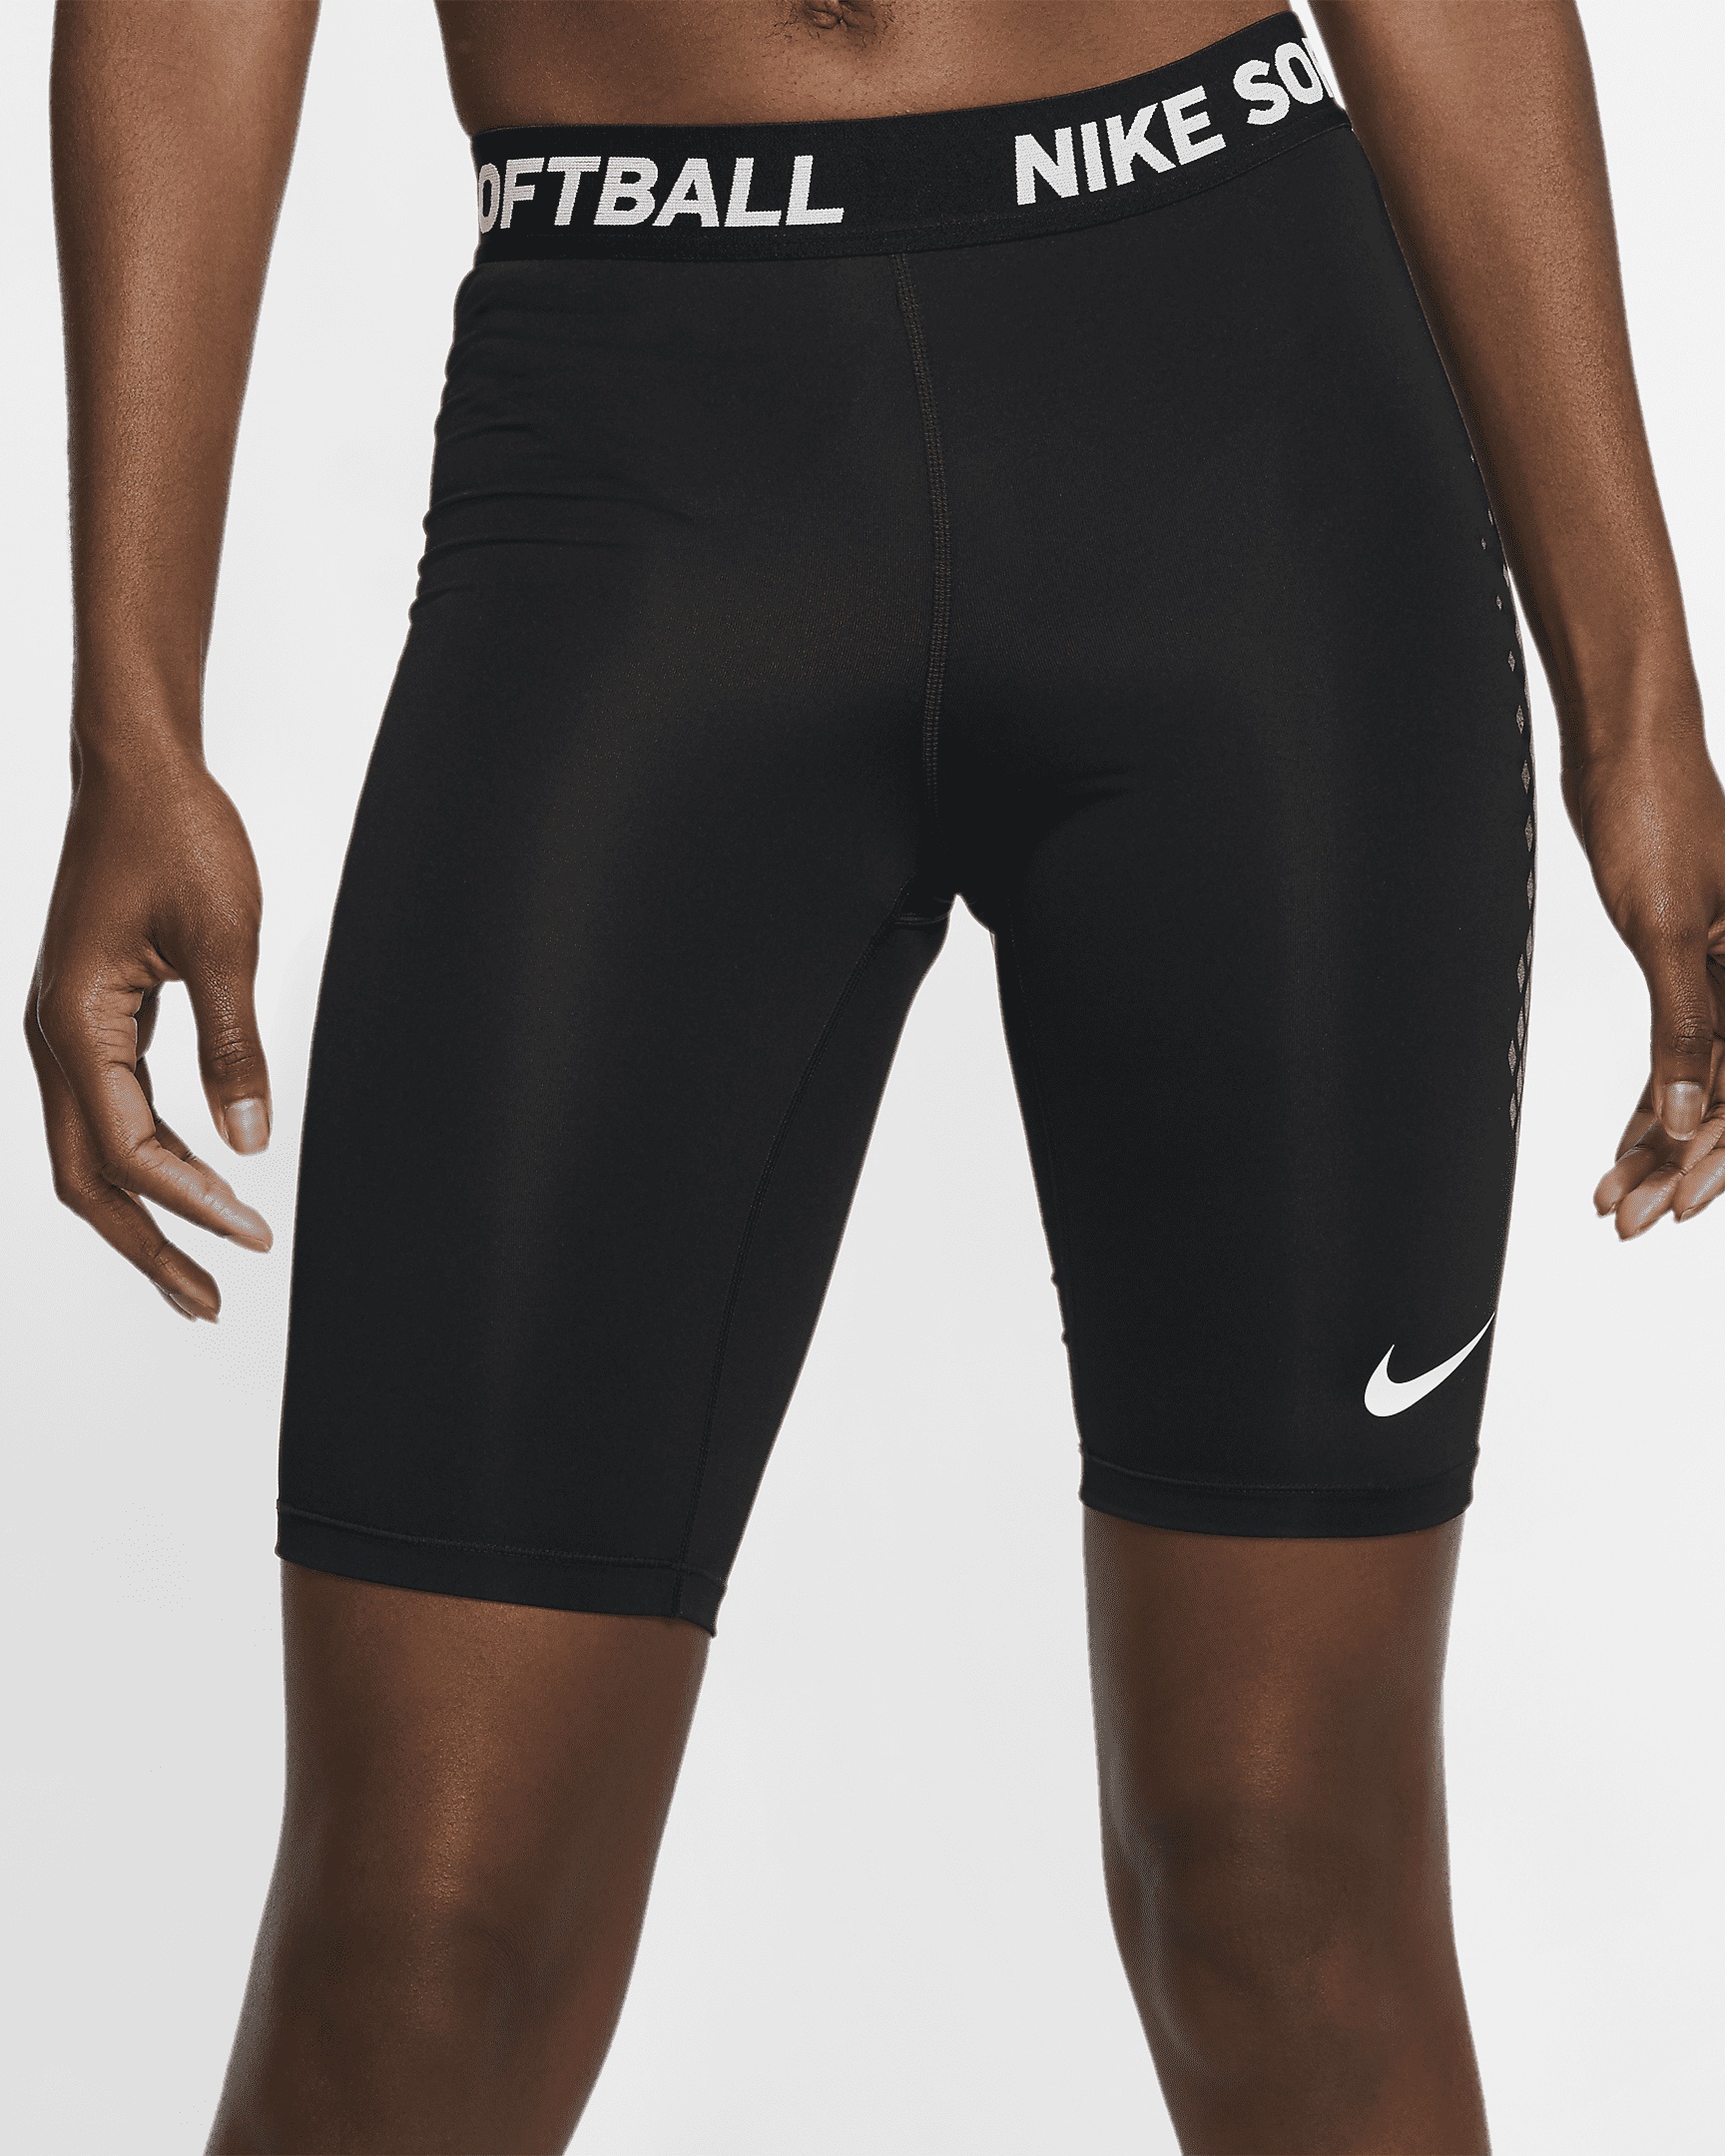 Nike Women's Slider Softball Shorts - 1